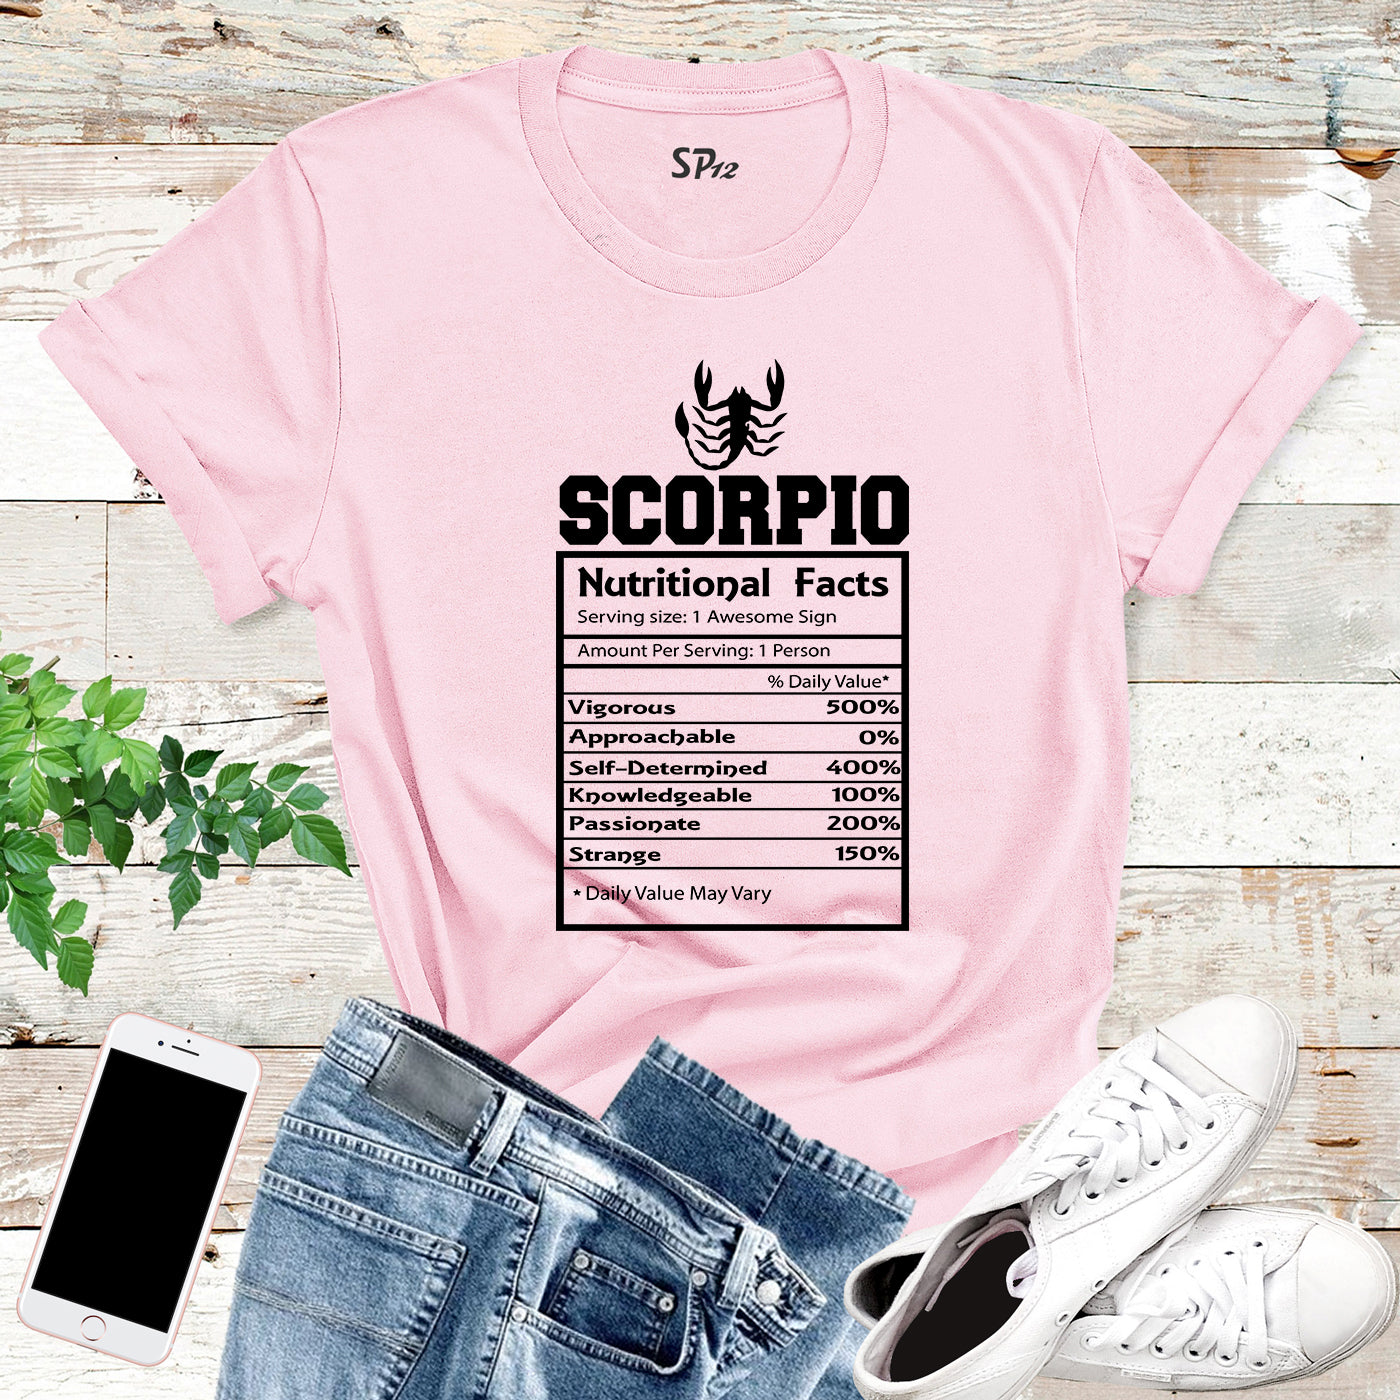 Scorpio Nutritional Facts T Shirt